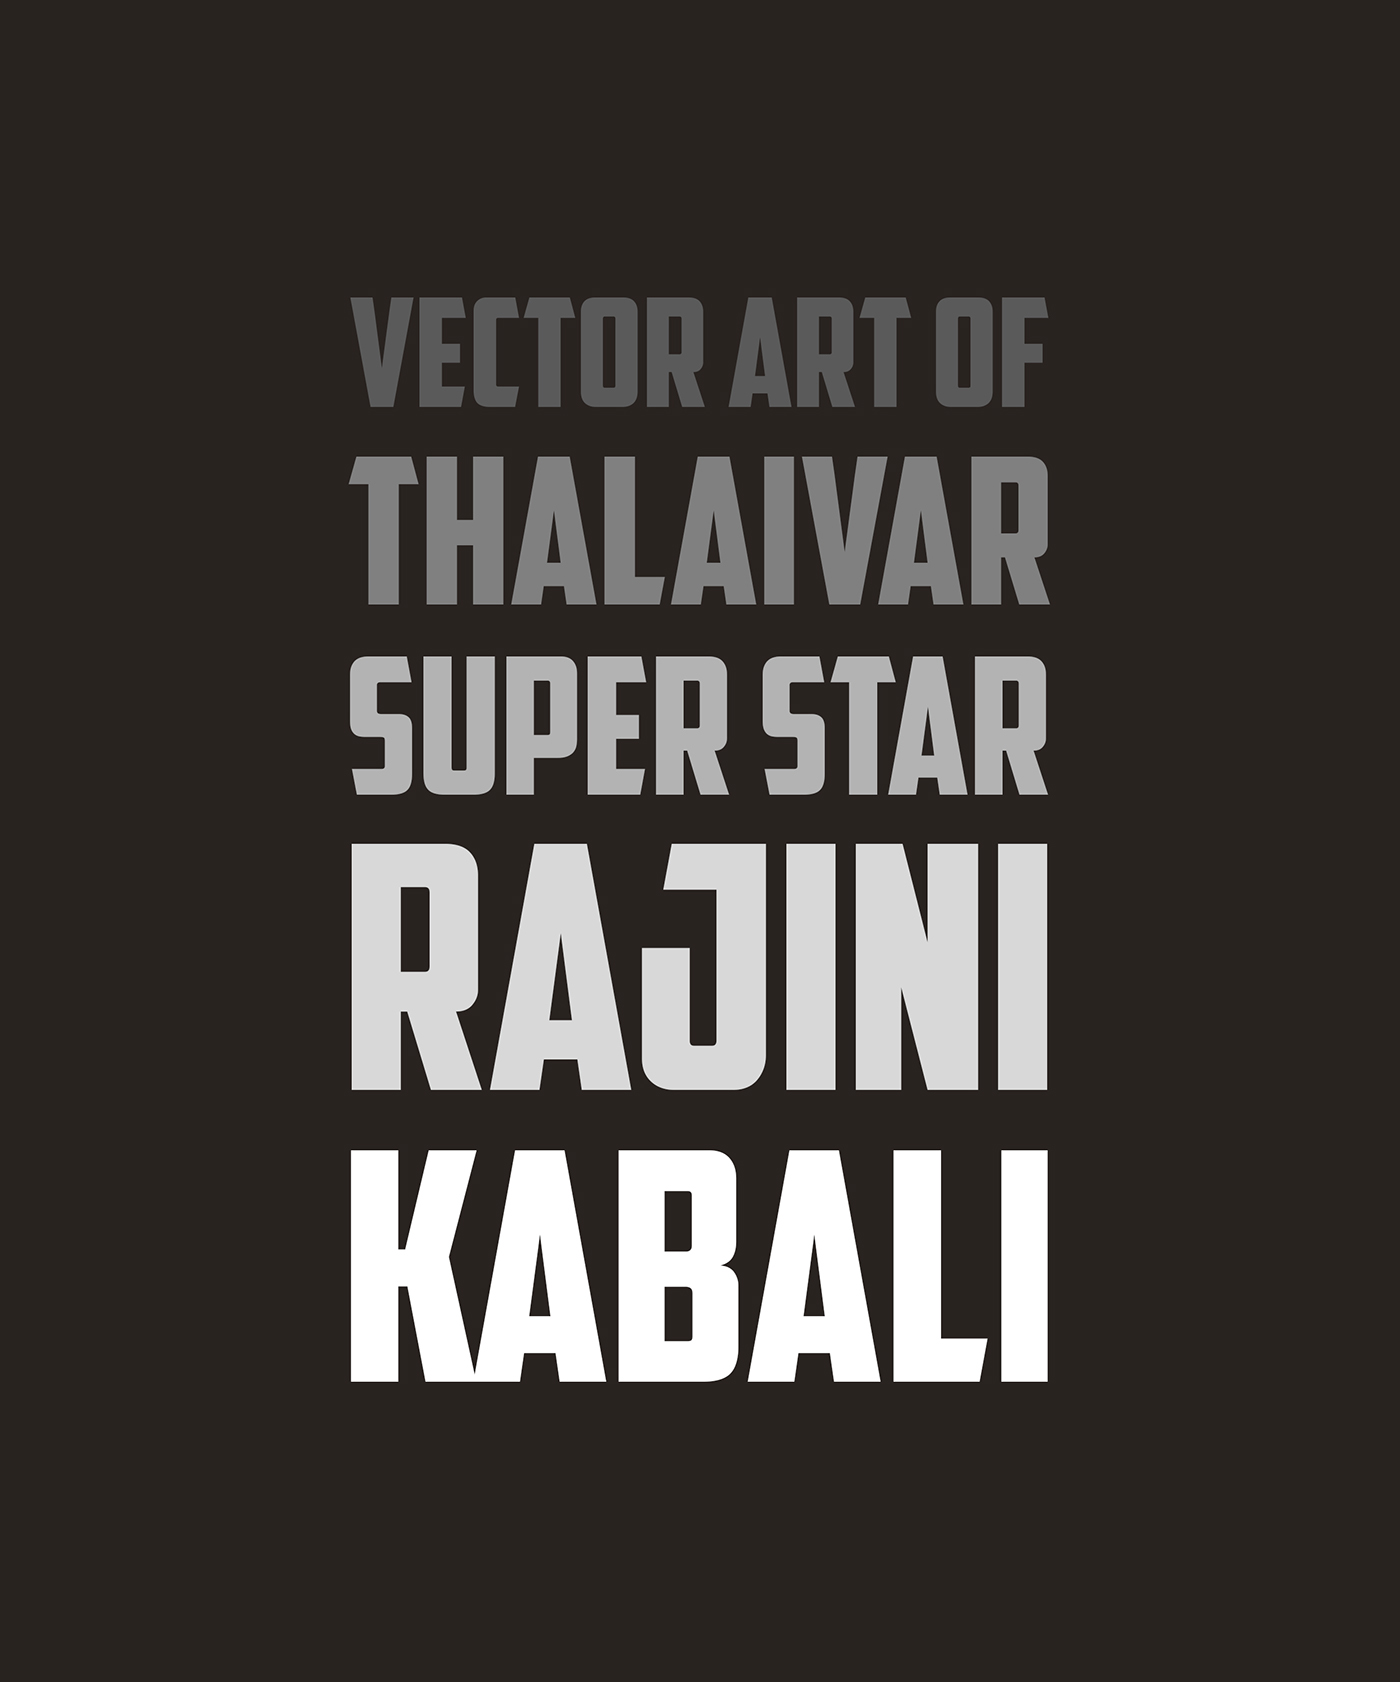 kabali Rajini Rajinikanth thalaivar movie superstar vector art typography   vactor Film  